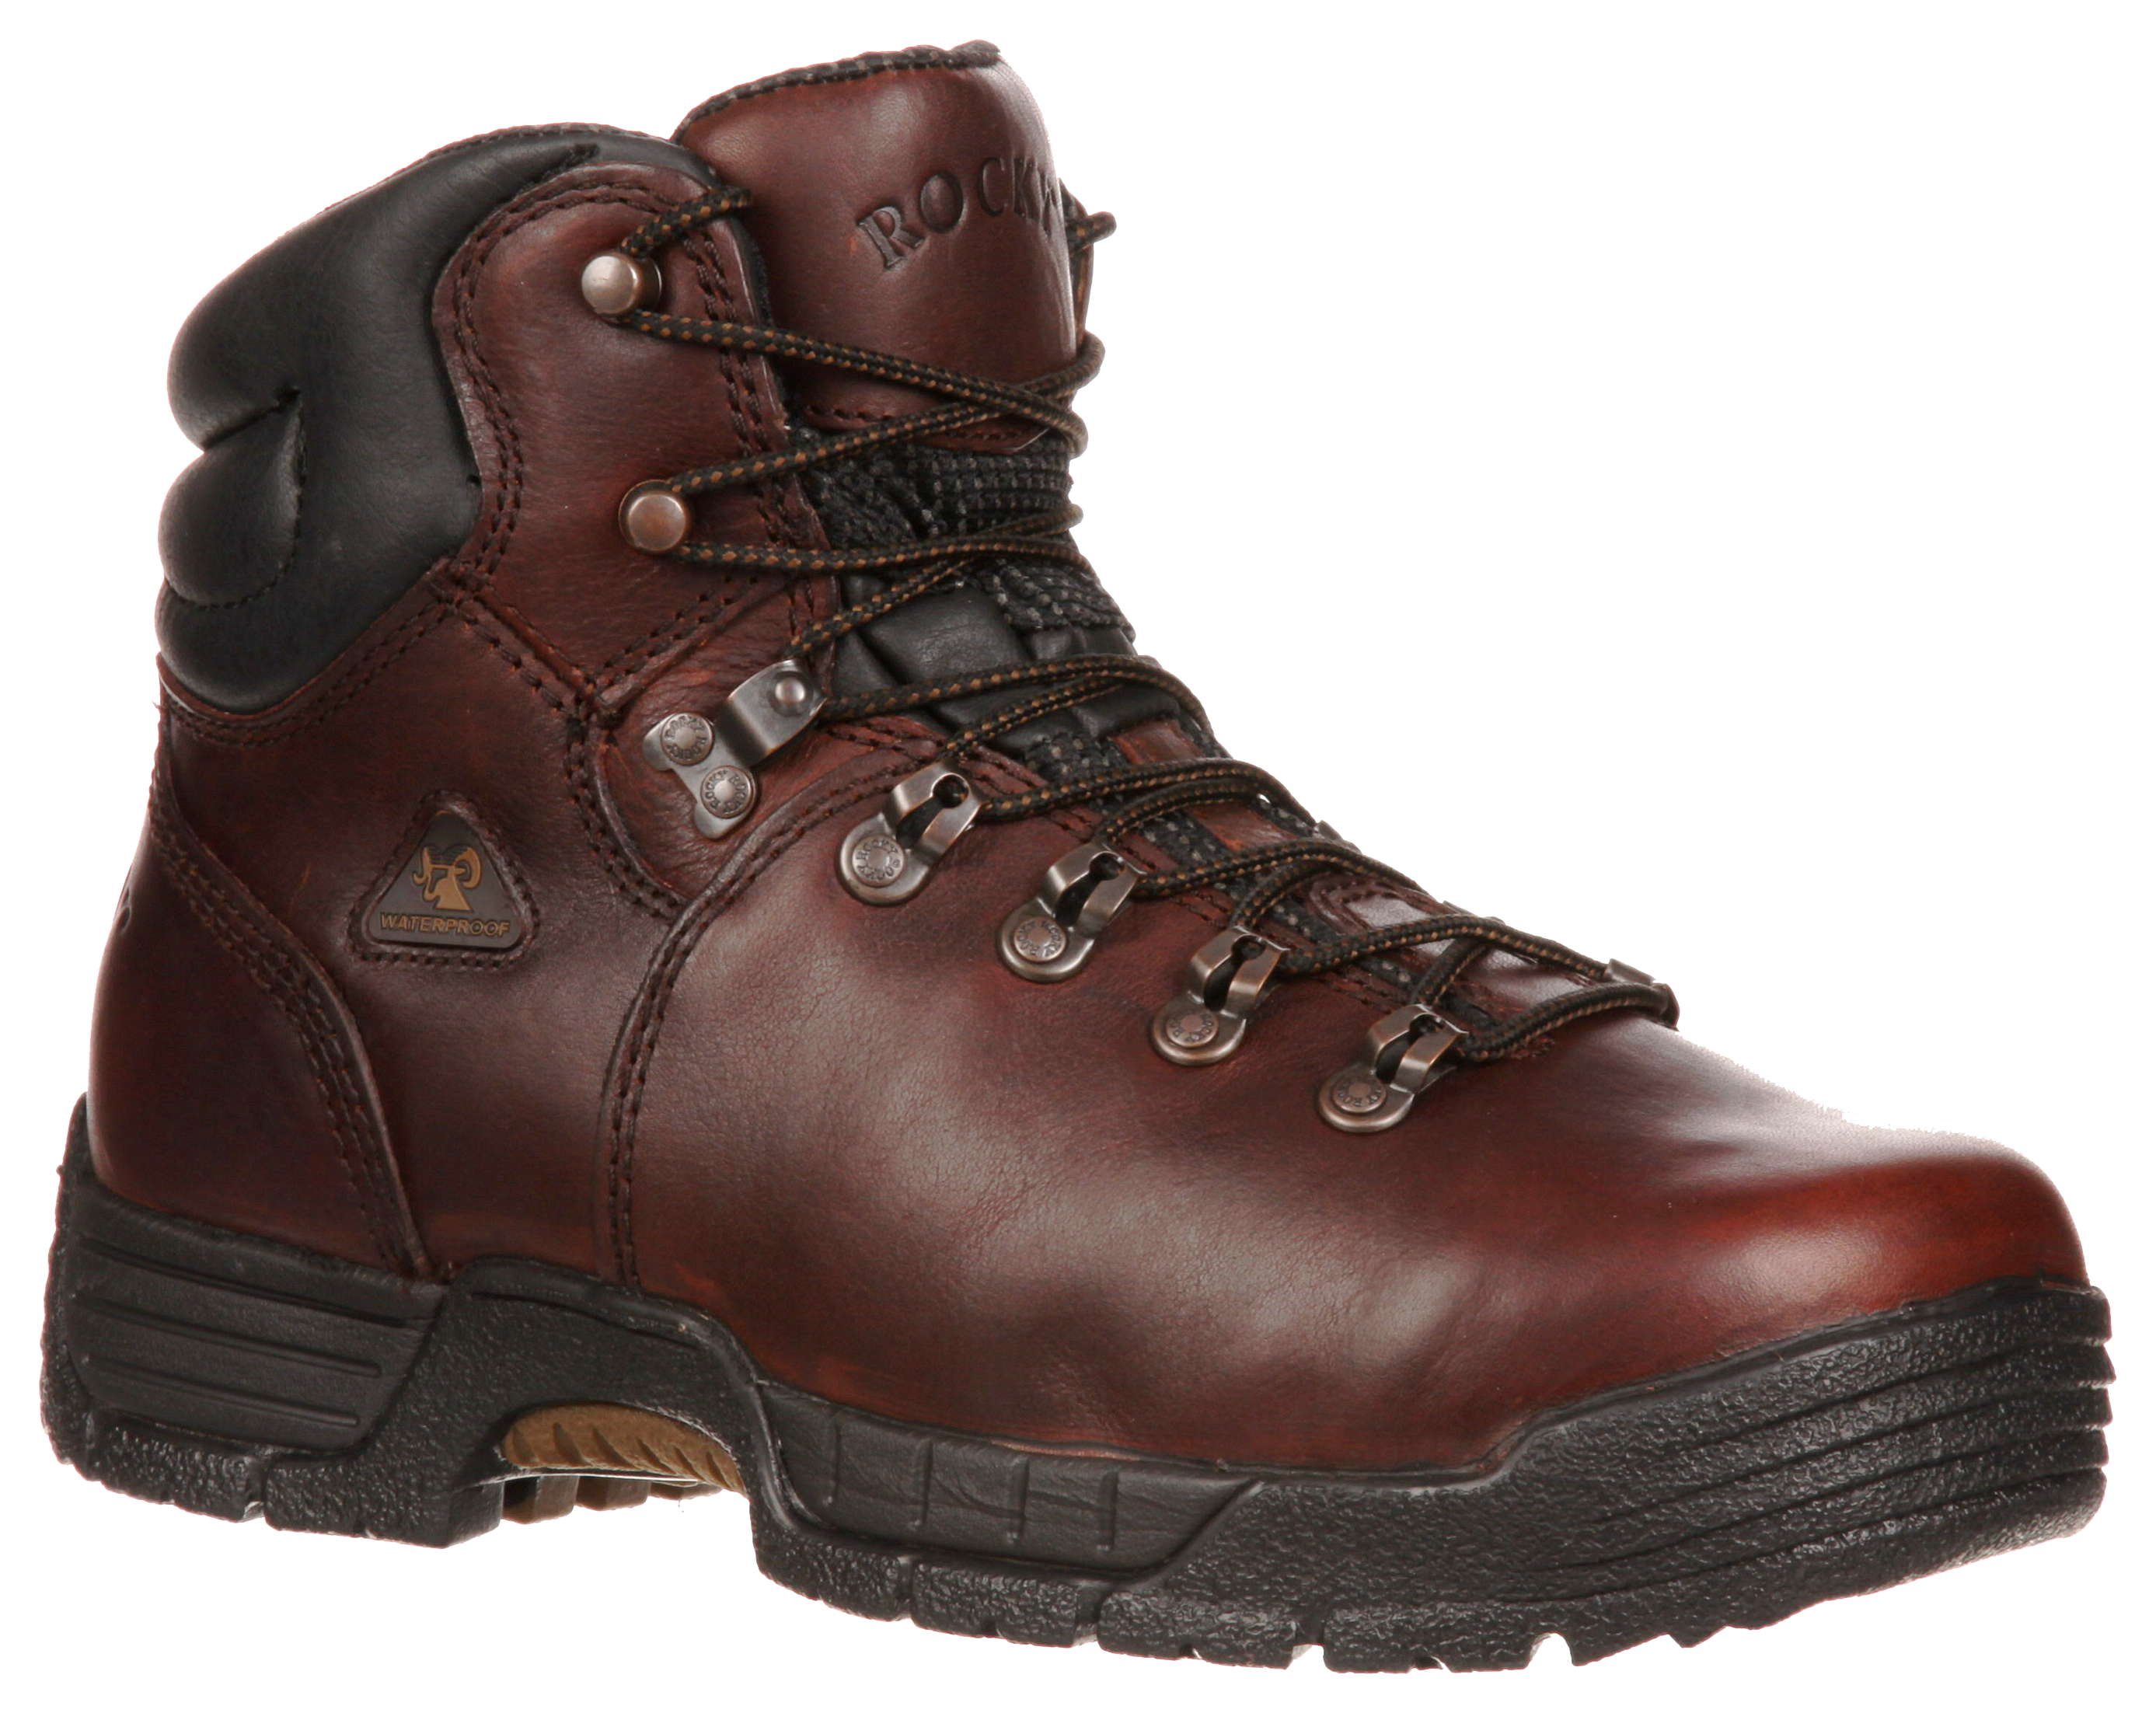 ROCKY MobiLite Waterproof Steel Toe Work Boots for Men - Brown - 15 W